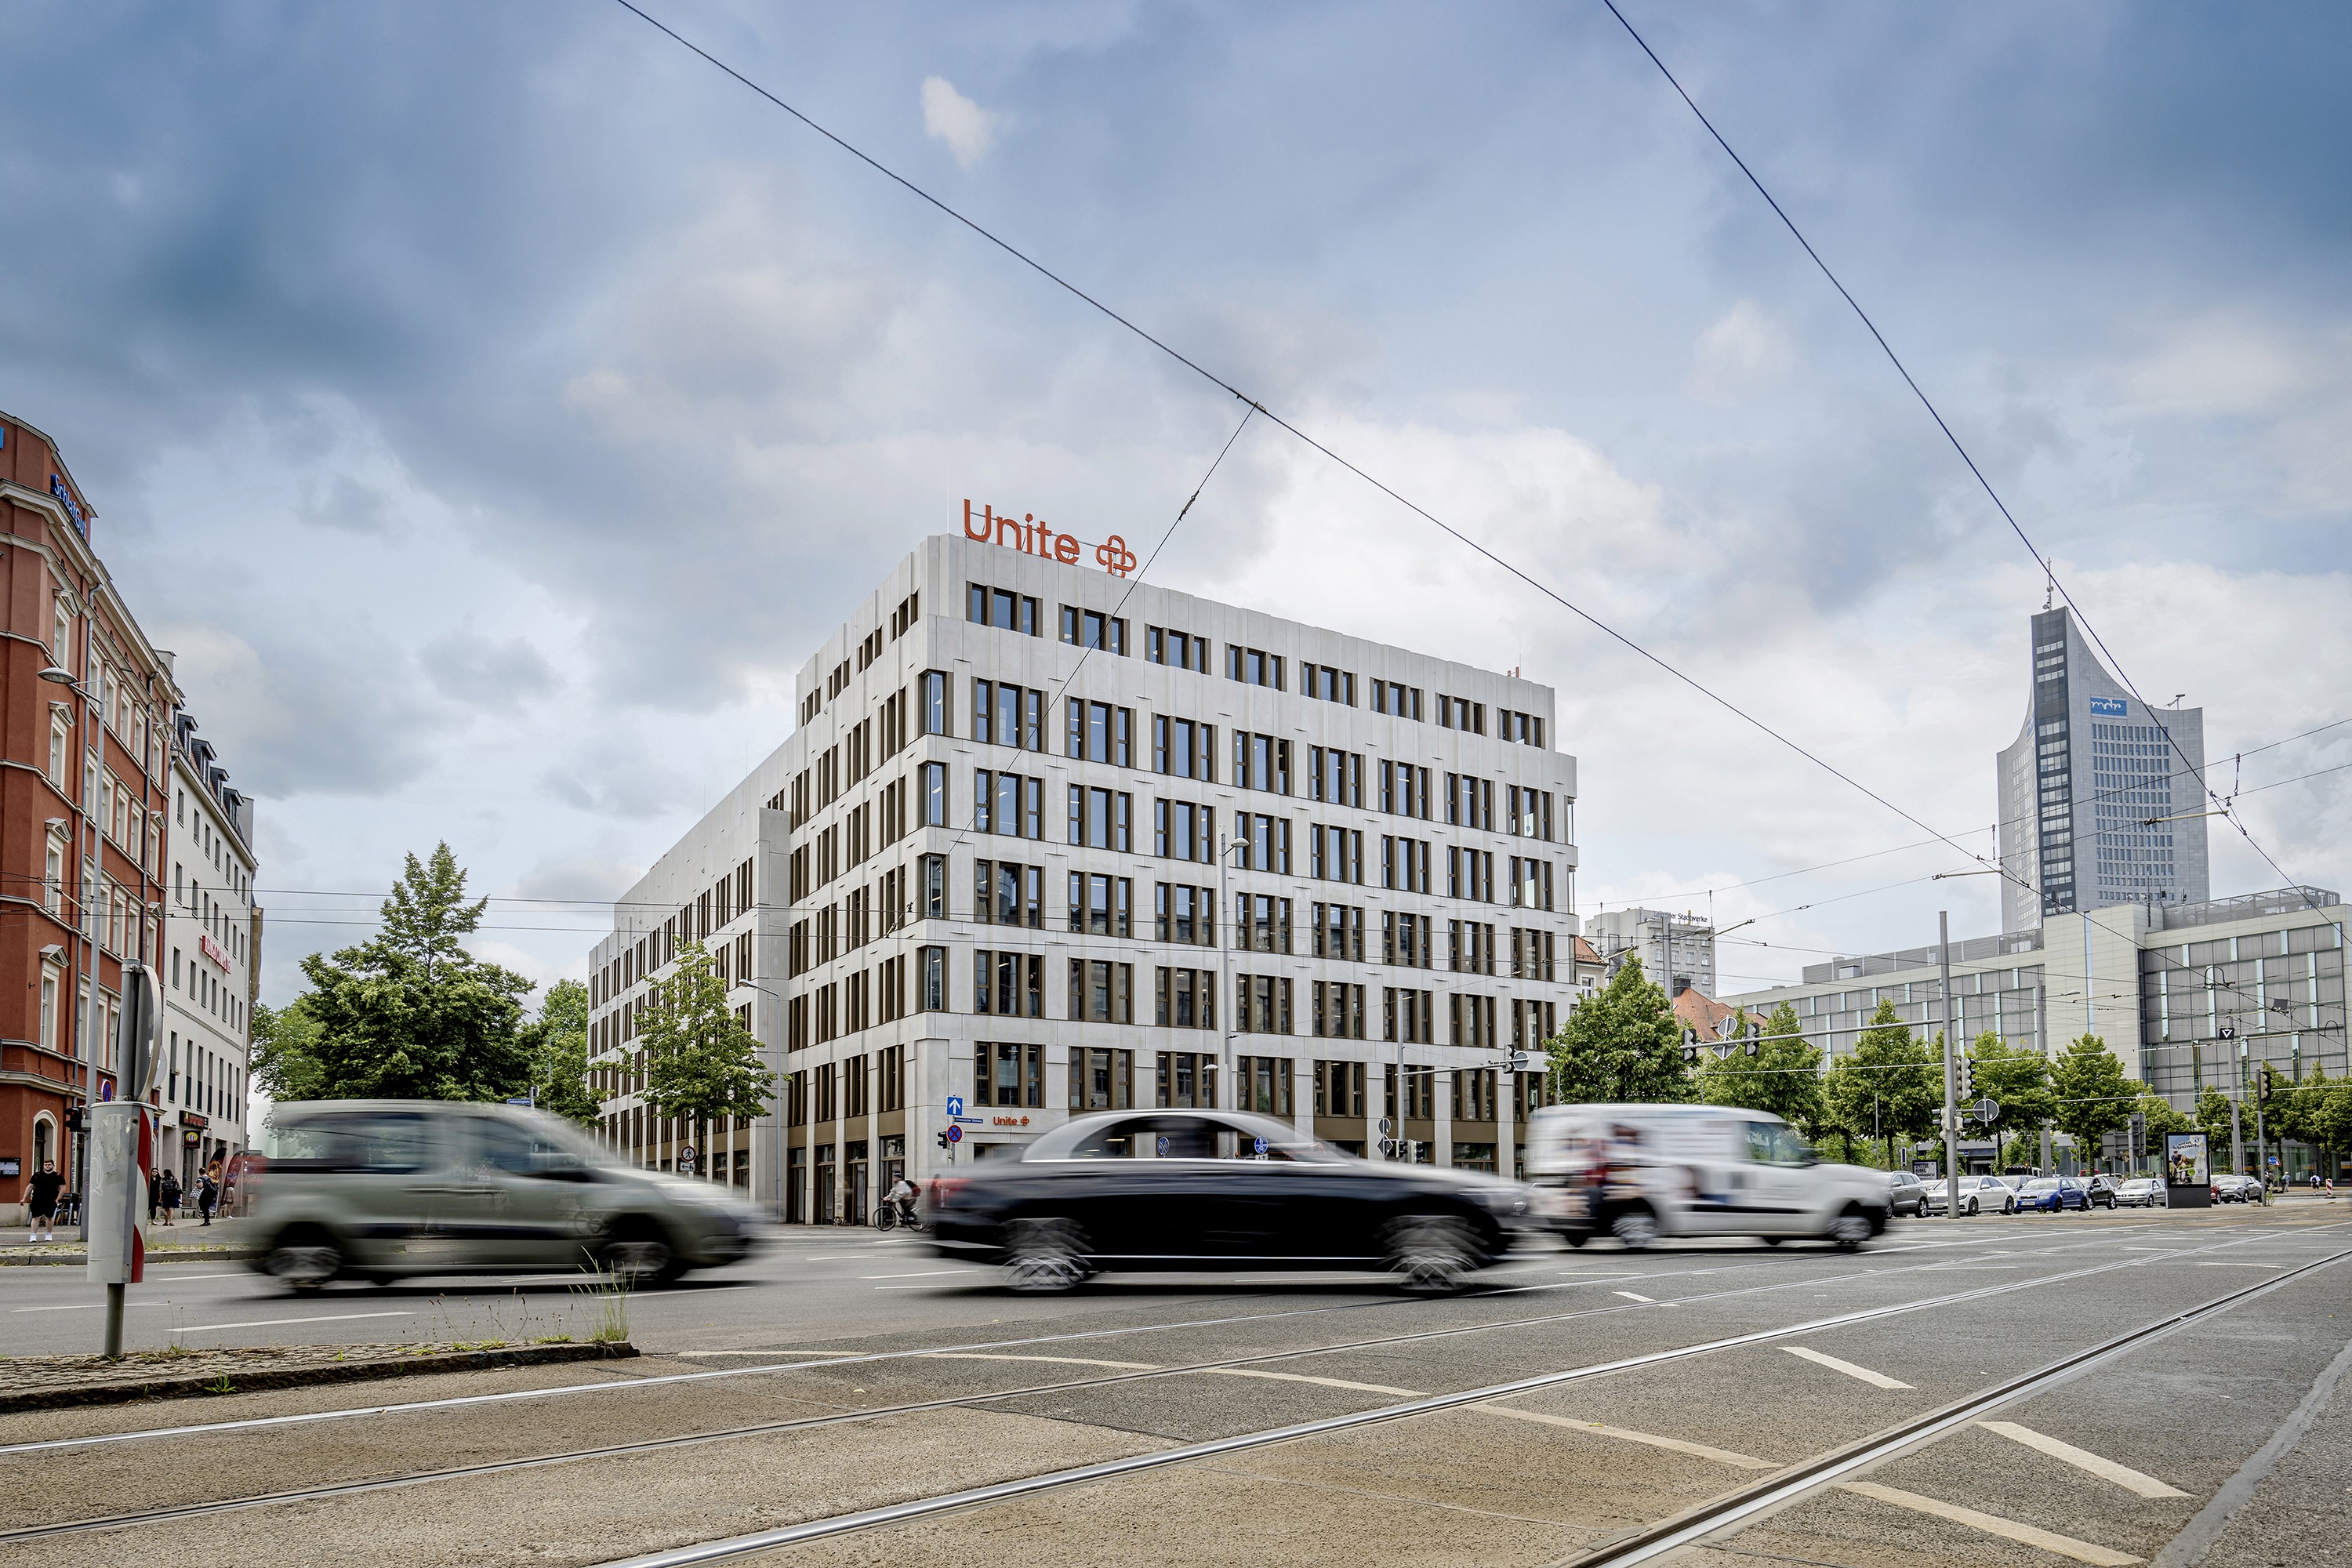 The Unite headquarters in the city of Leipzig